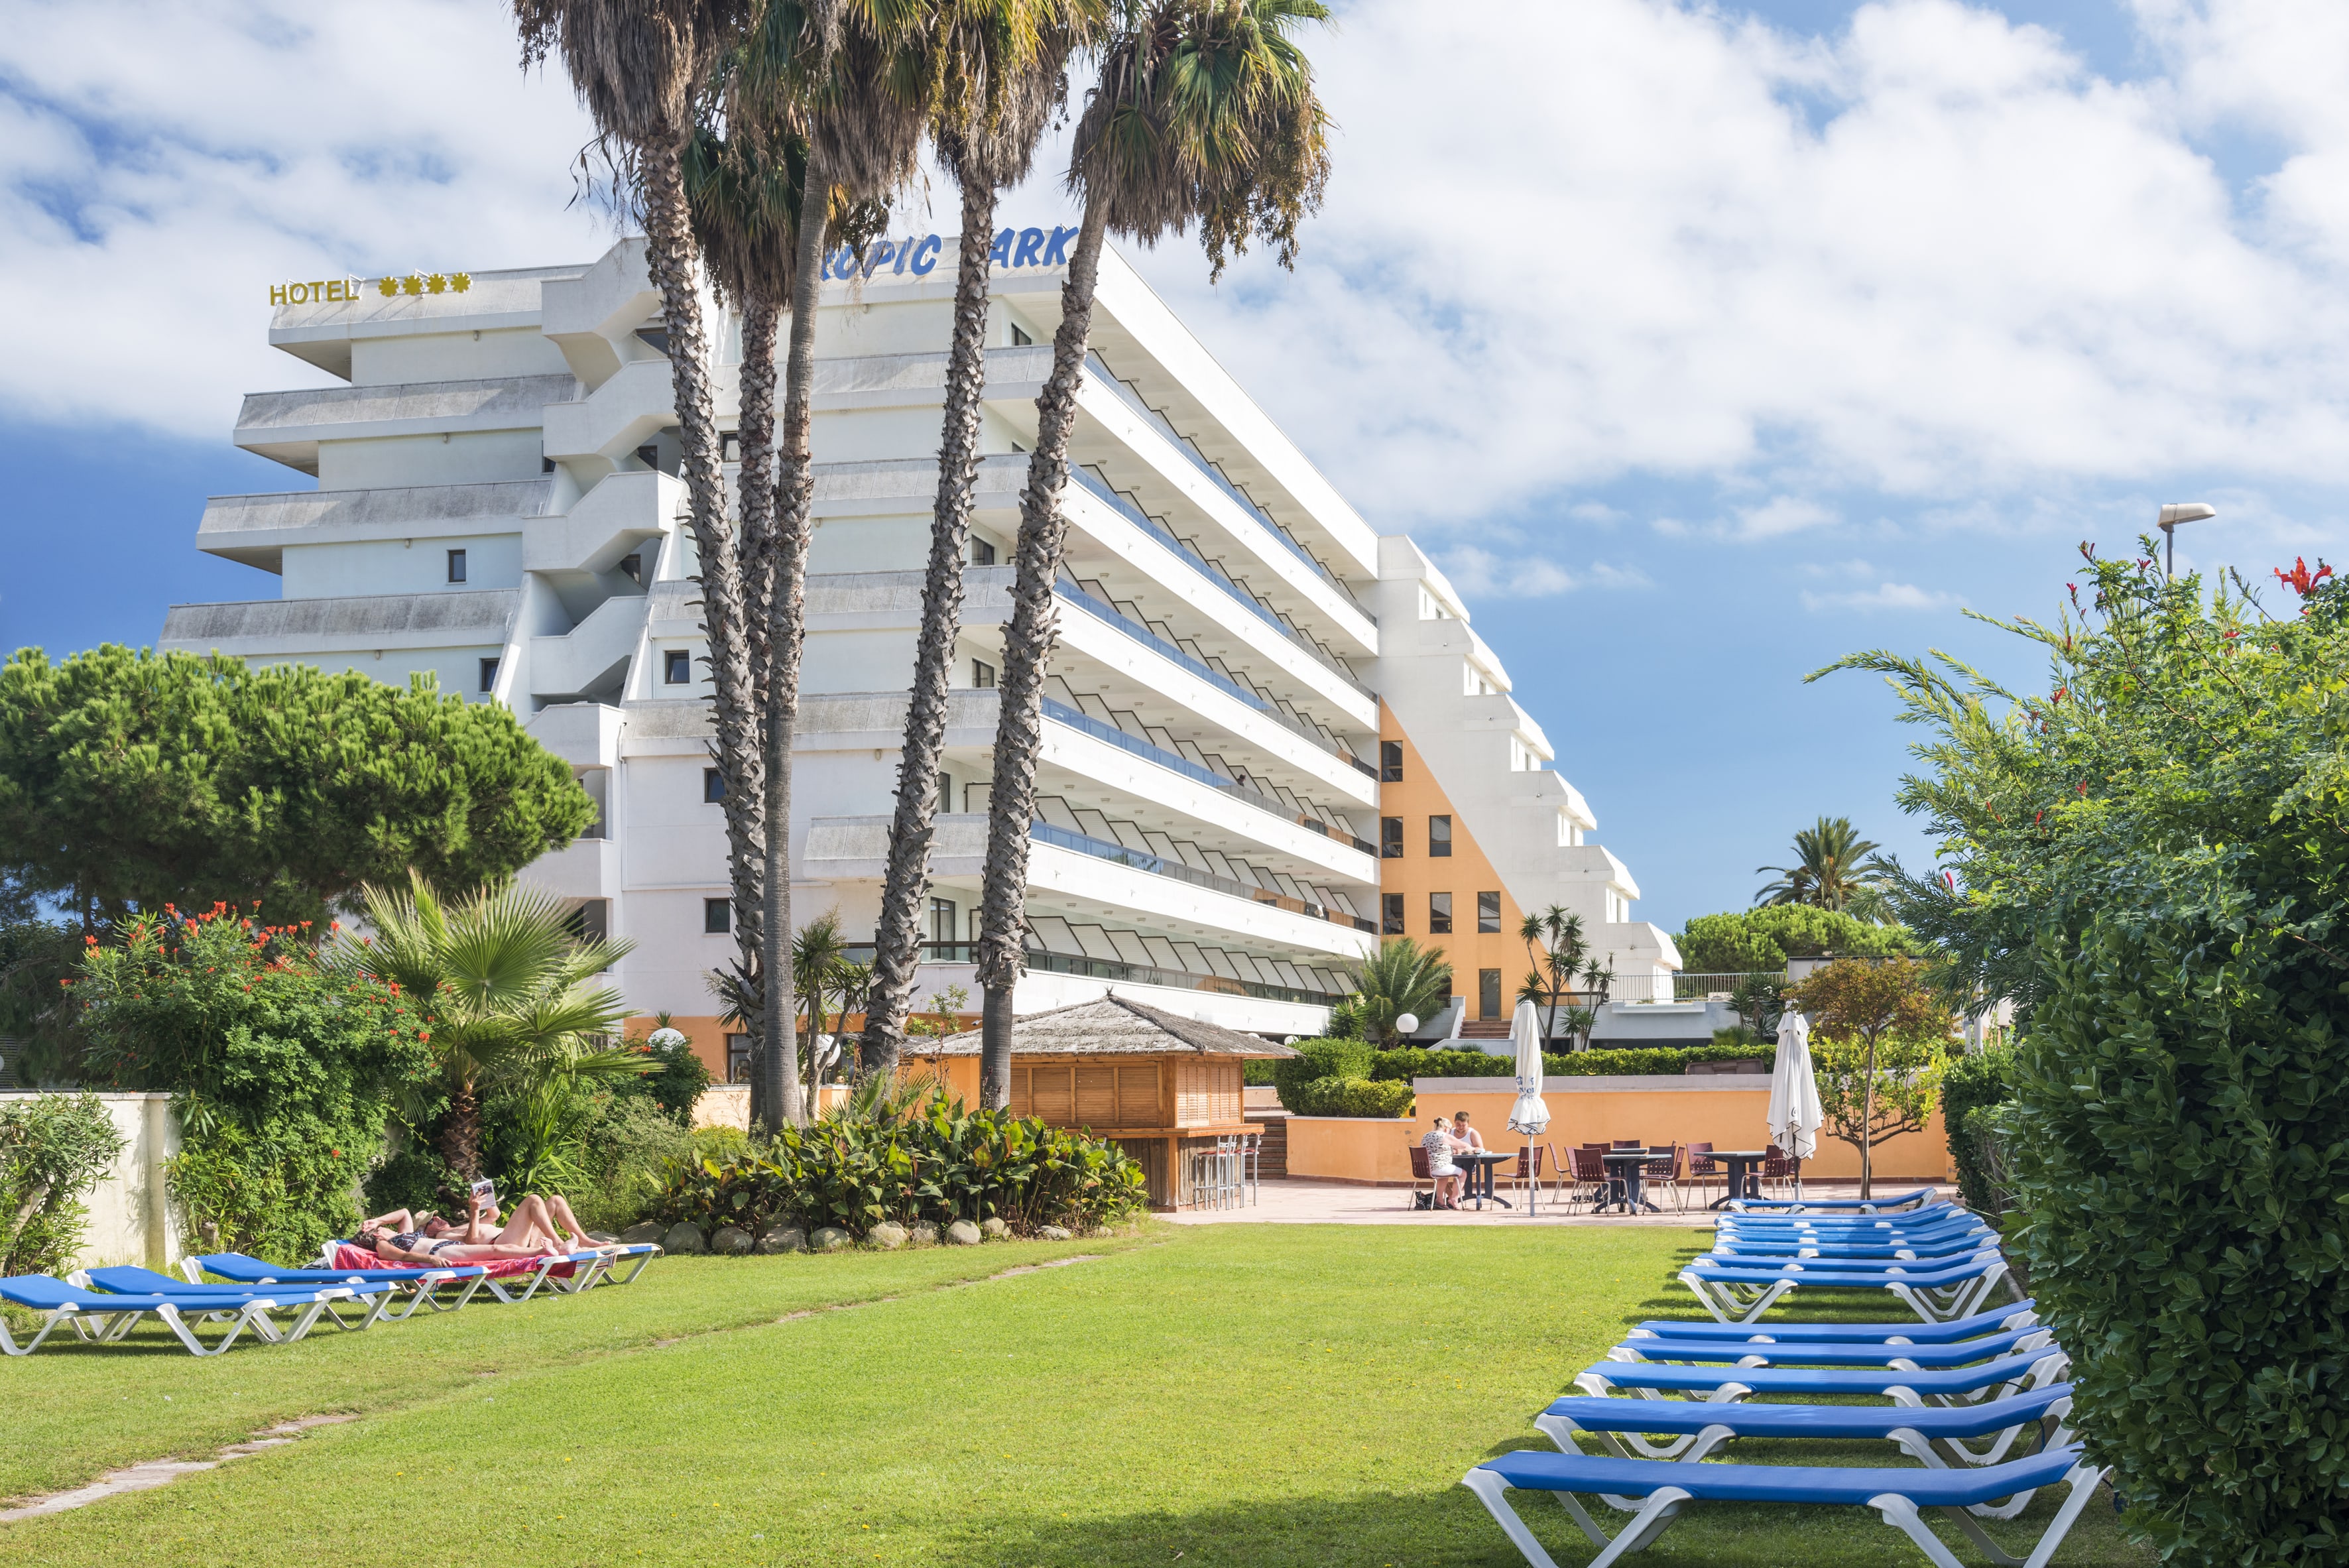 Hotel Tropic Park - Malgrat - Hiszpania